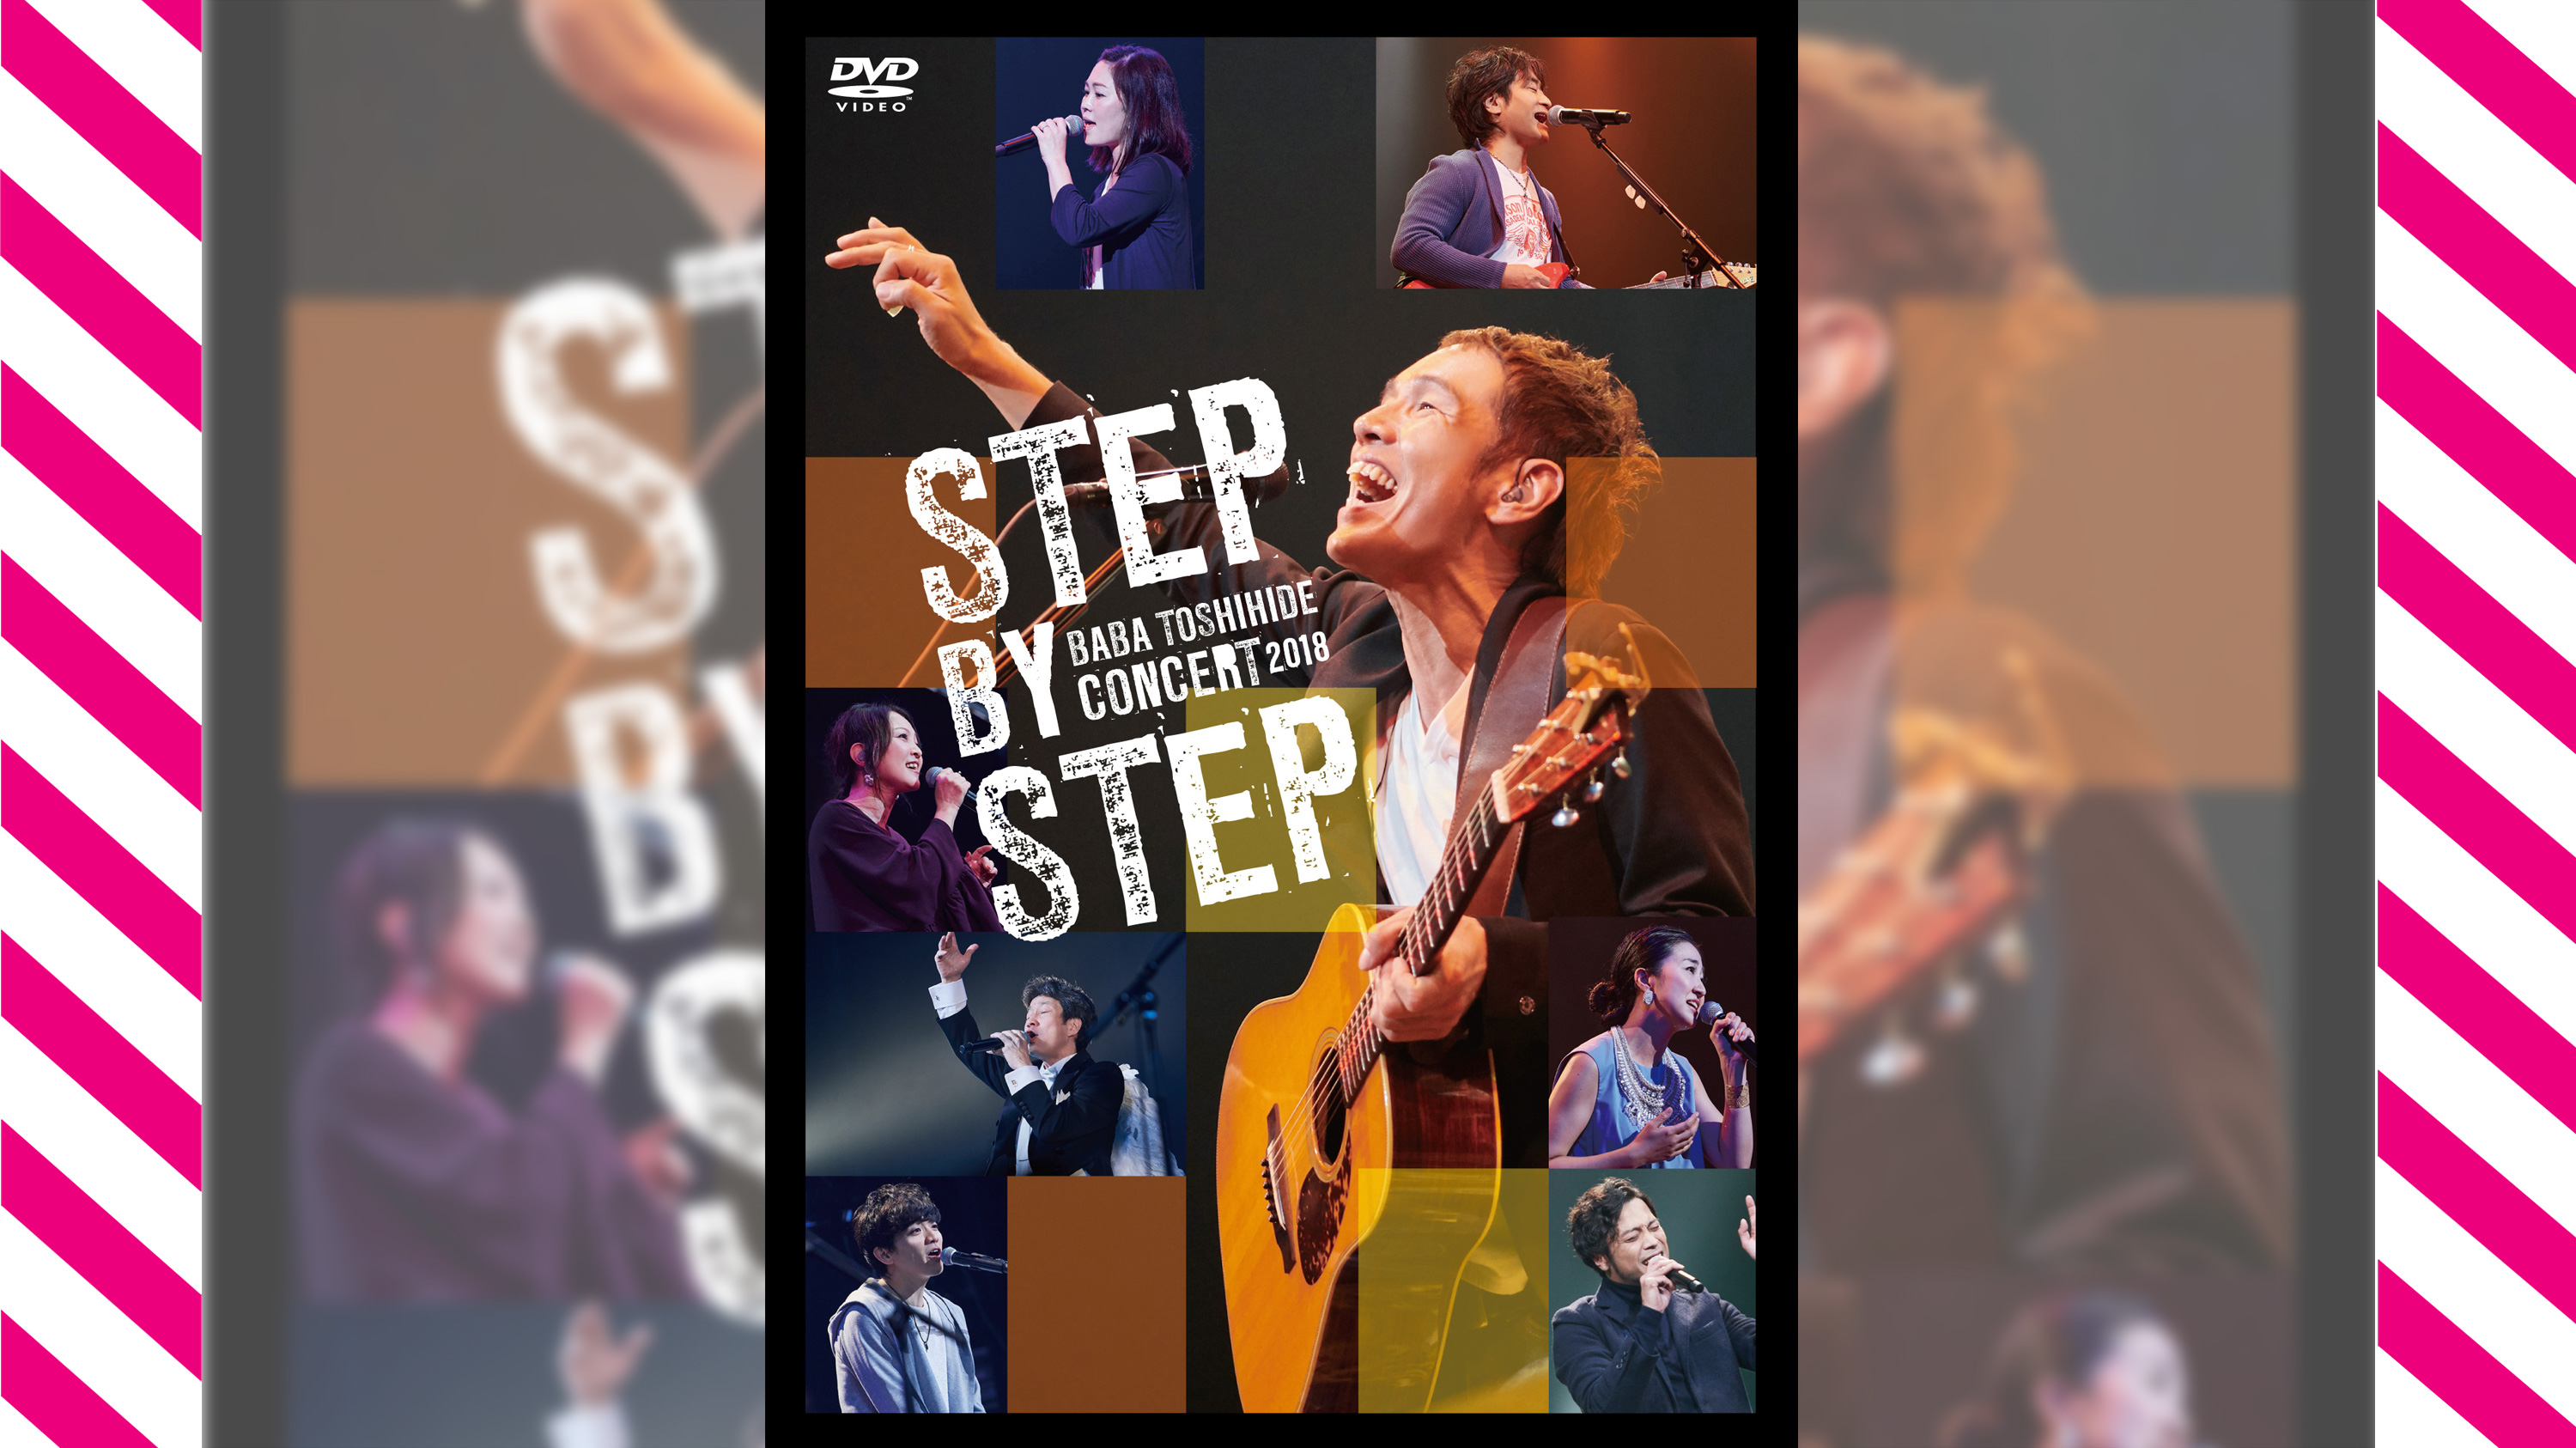 BABA TOSHIHIDE STEP BY STEP CONCERT 2018 [DVD](品) | monsterdog.com.br